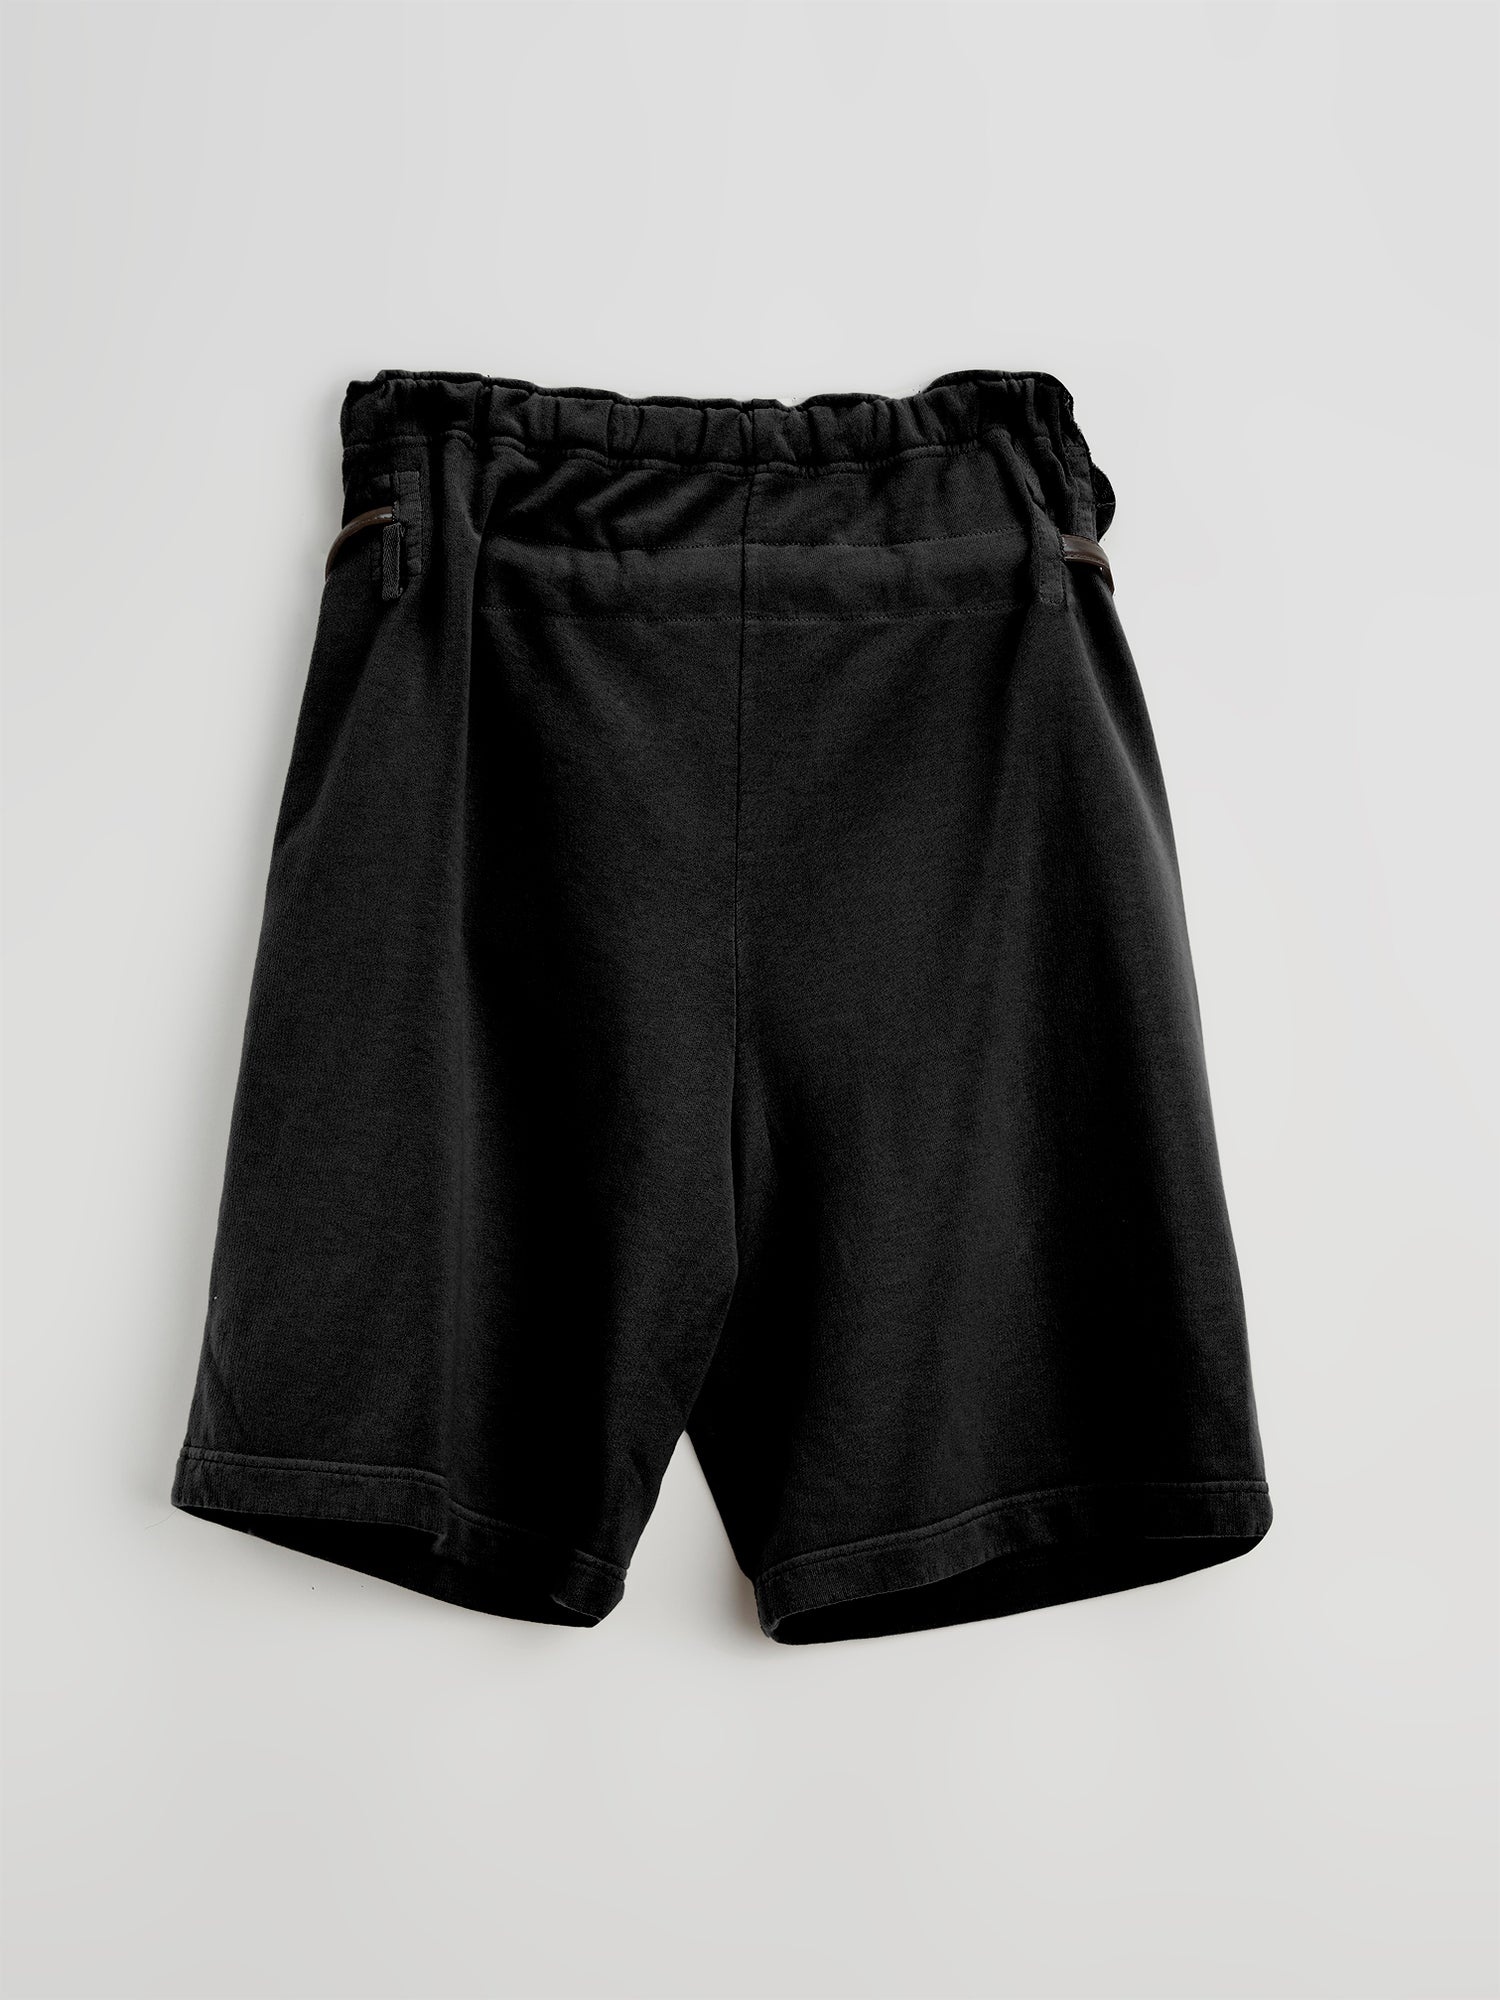 Provincia Athletic Shorts True Black - 2